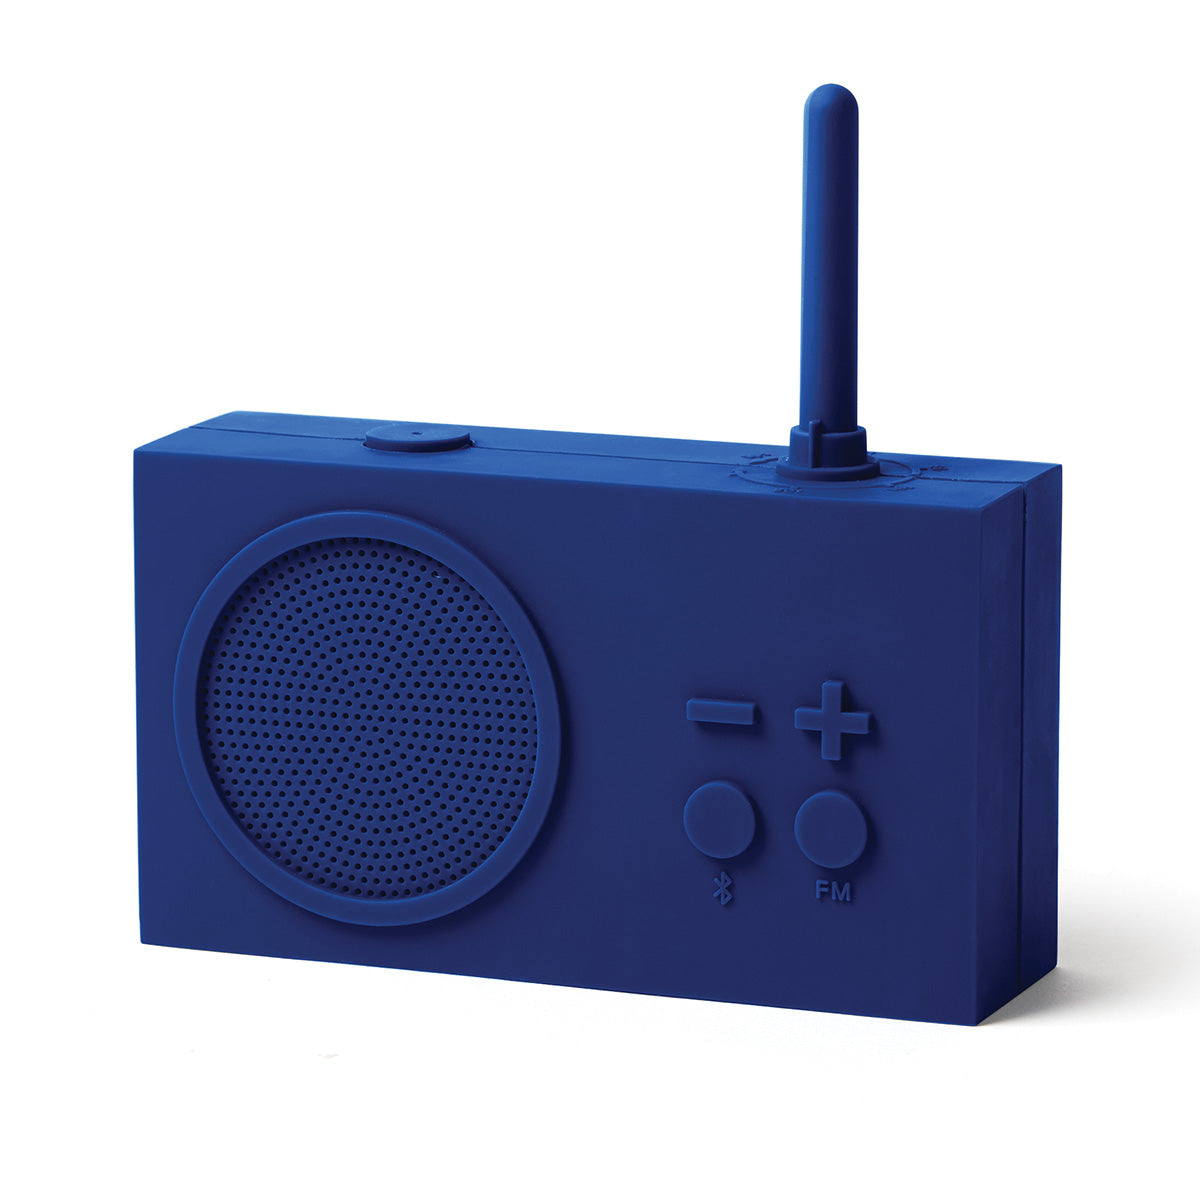 Lexon Tykho 3 Bluetooth Speaker with FM Radio